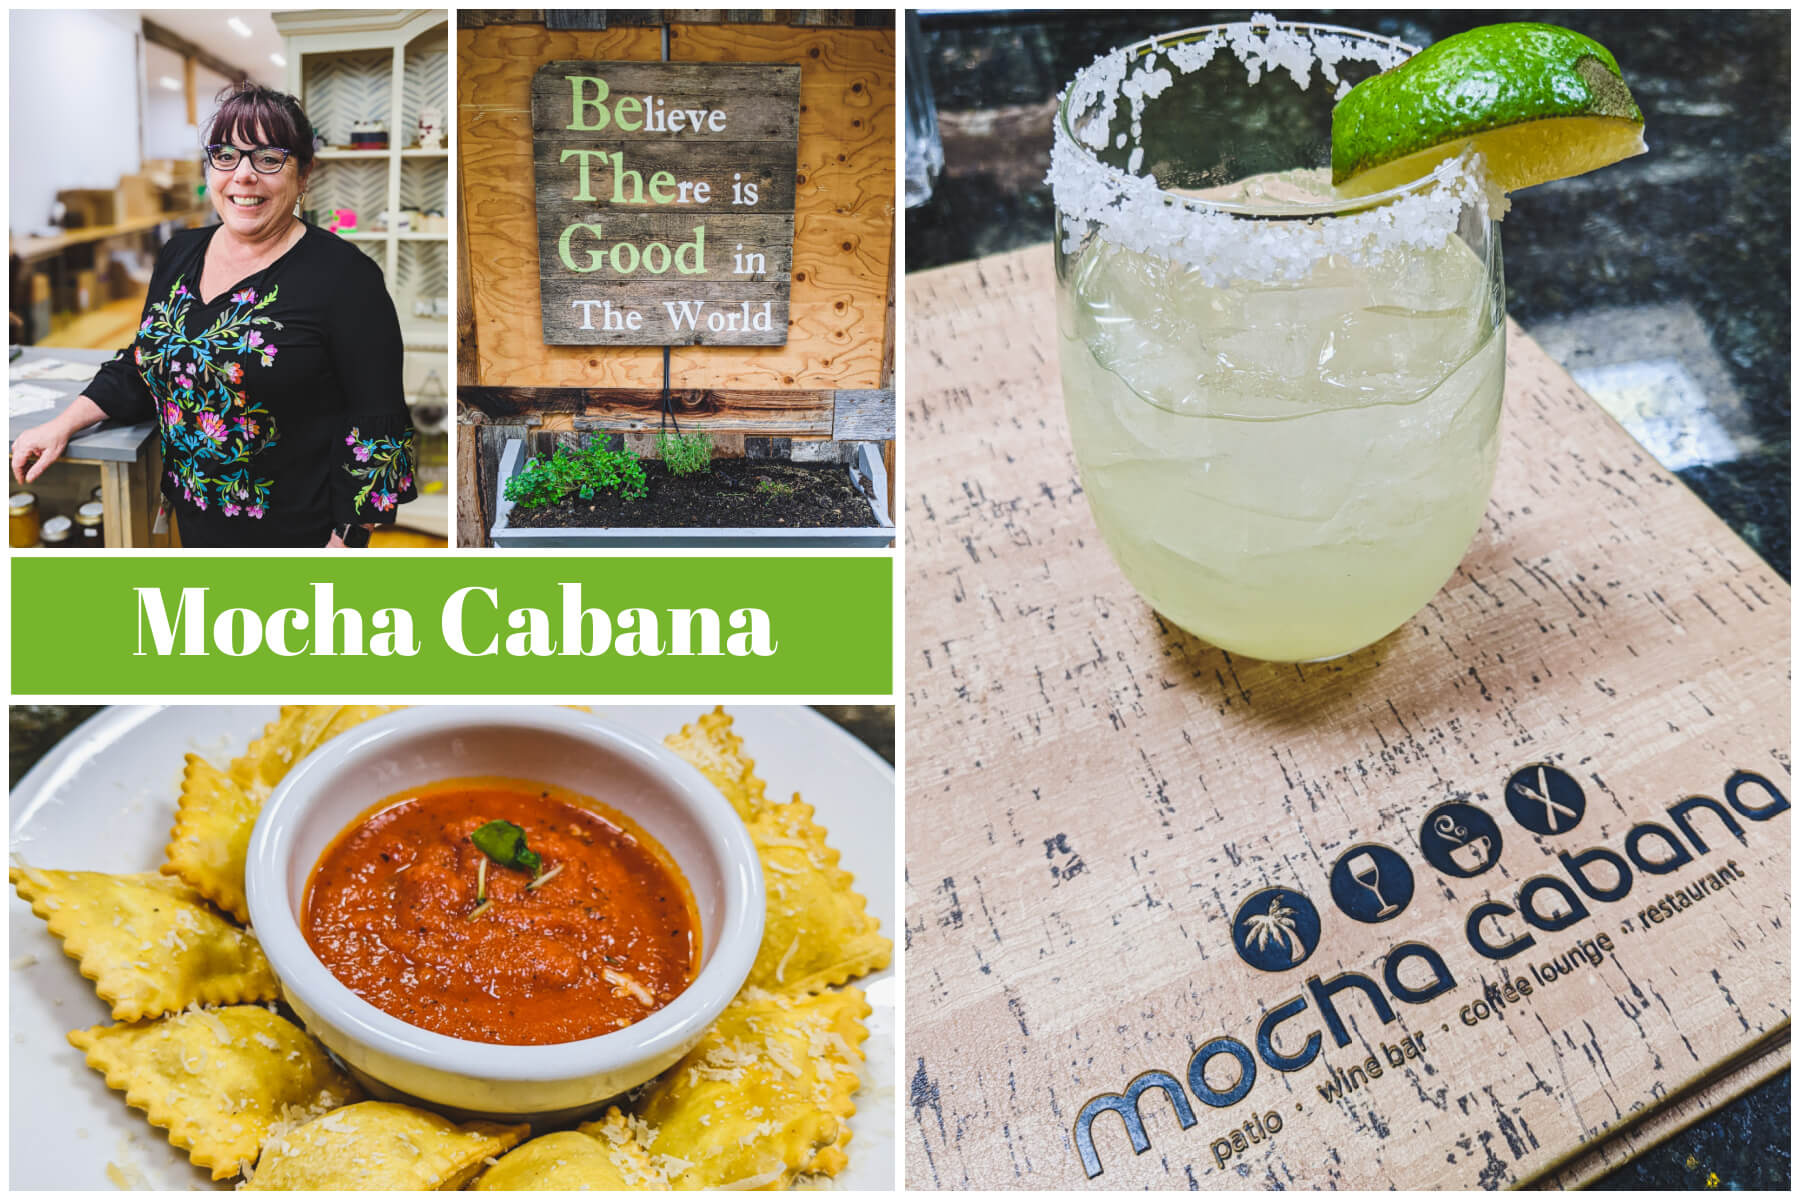 A collection of photos captured at Mocha Cabana Restaurant in Lethbridge Alberta.